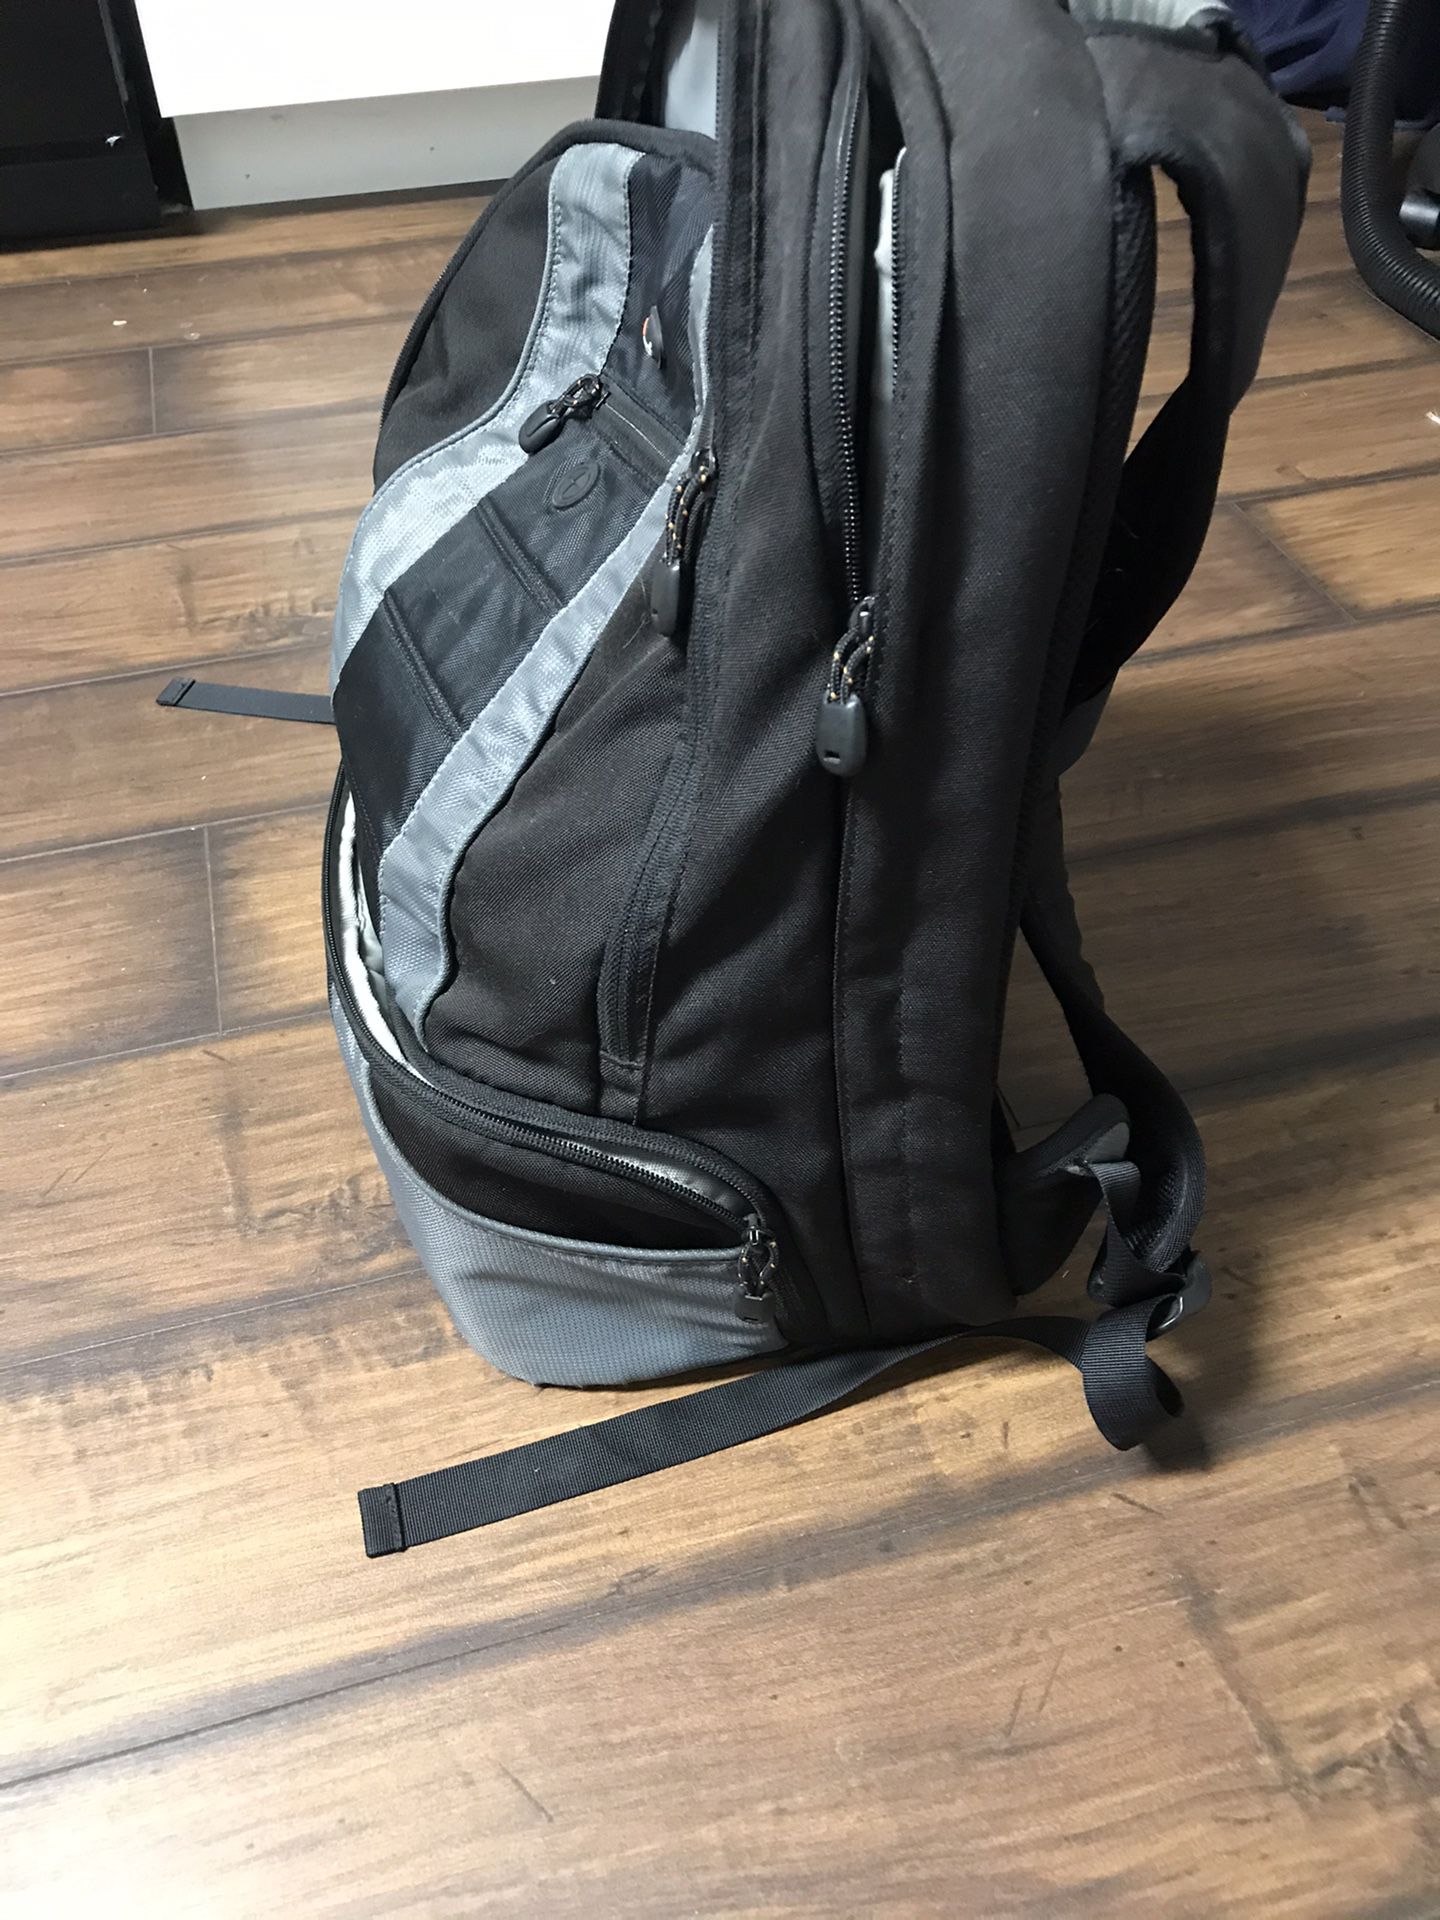 Lowe pro backpack